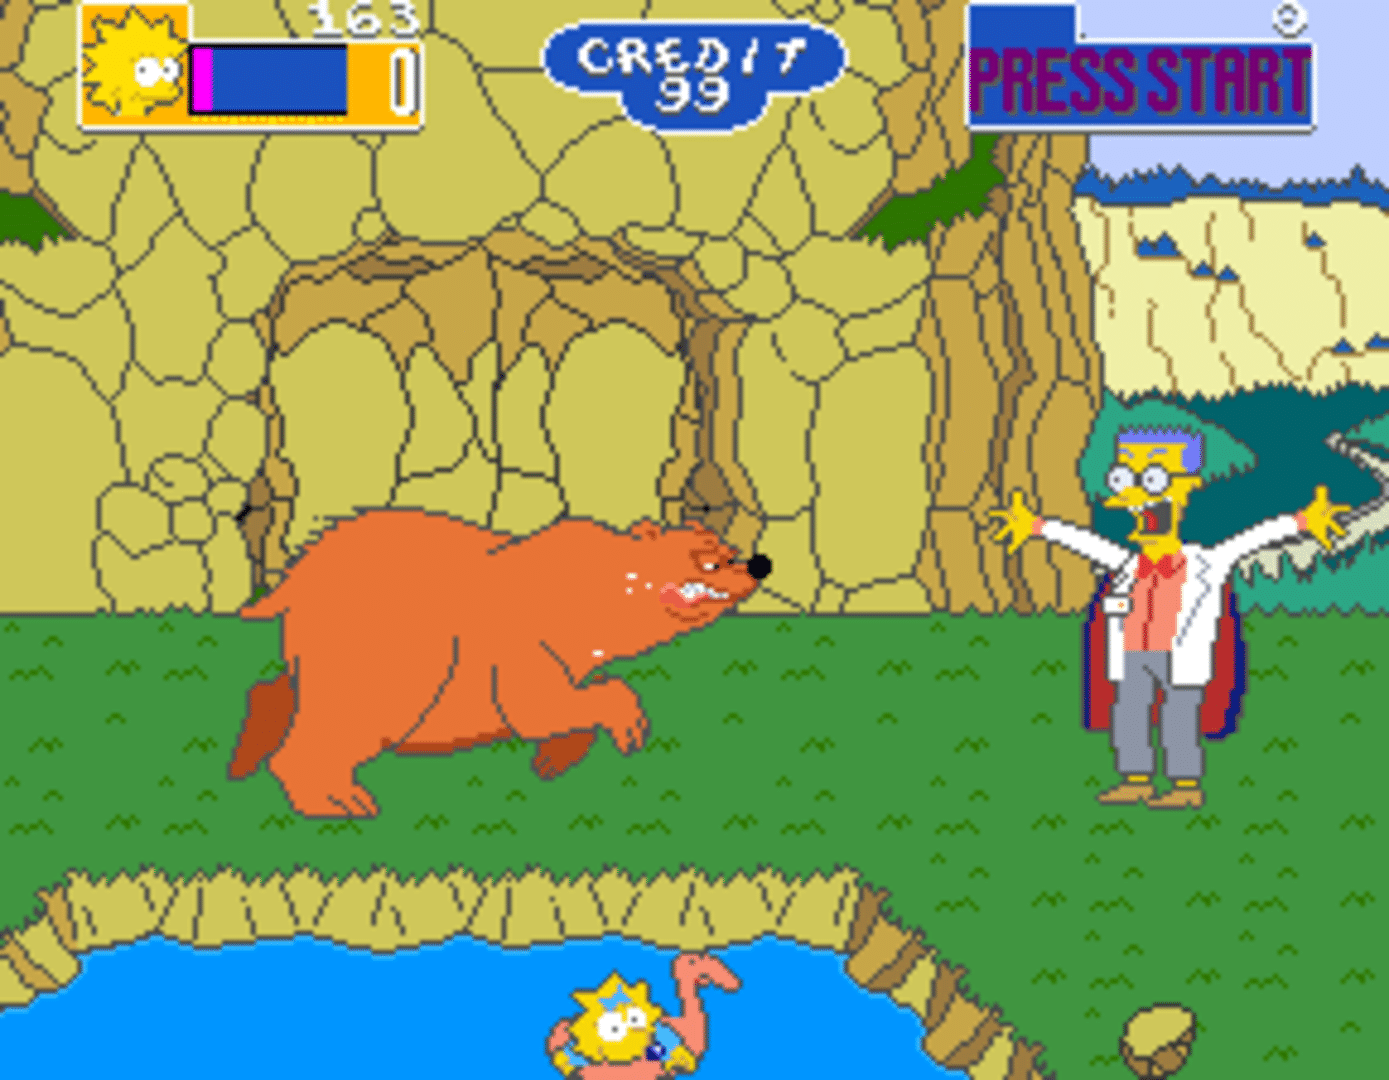 The Simpsons Arcade Game screenshot